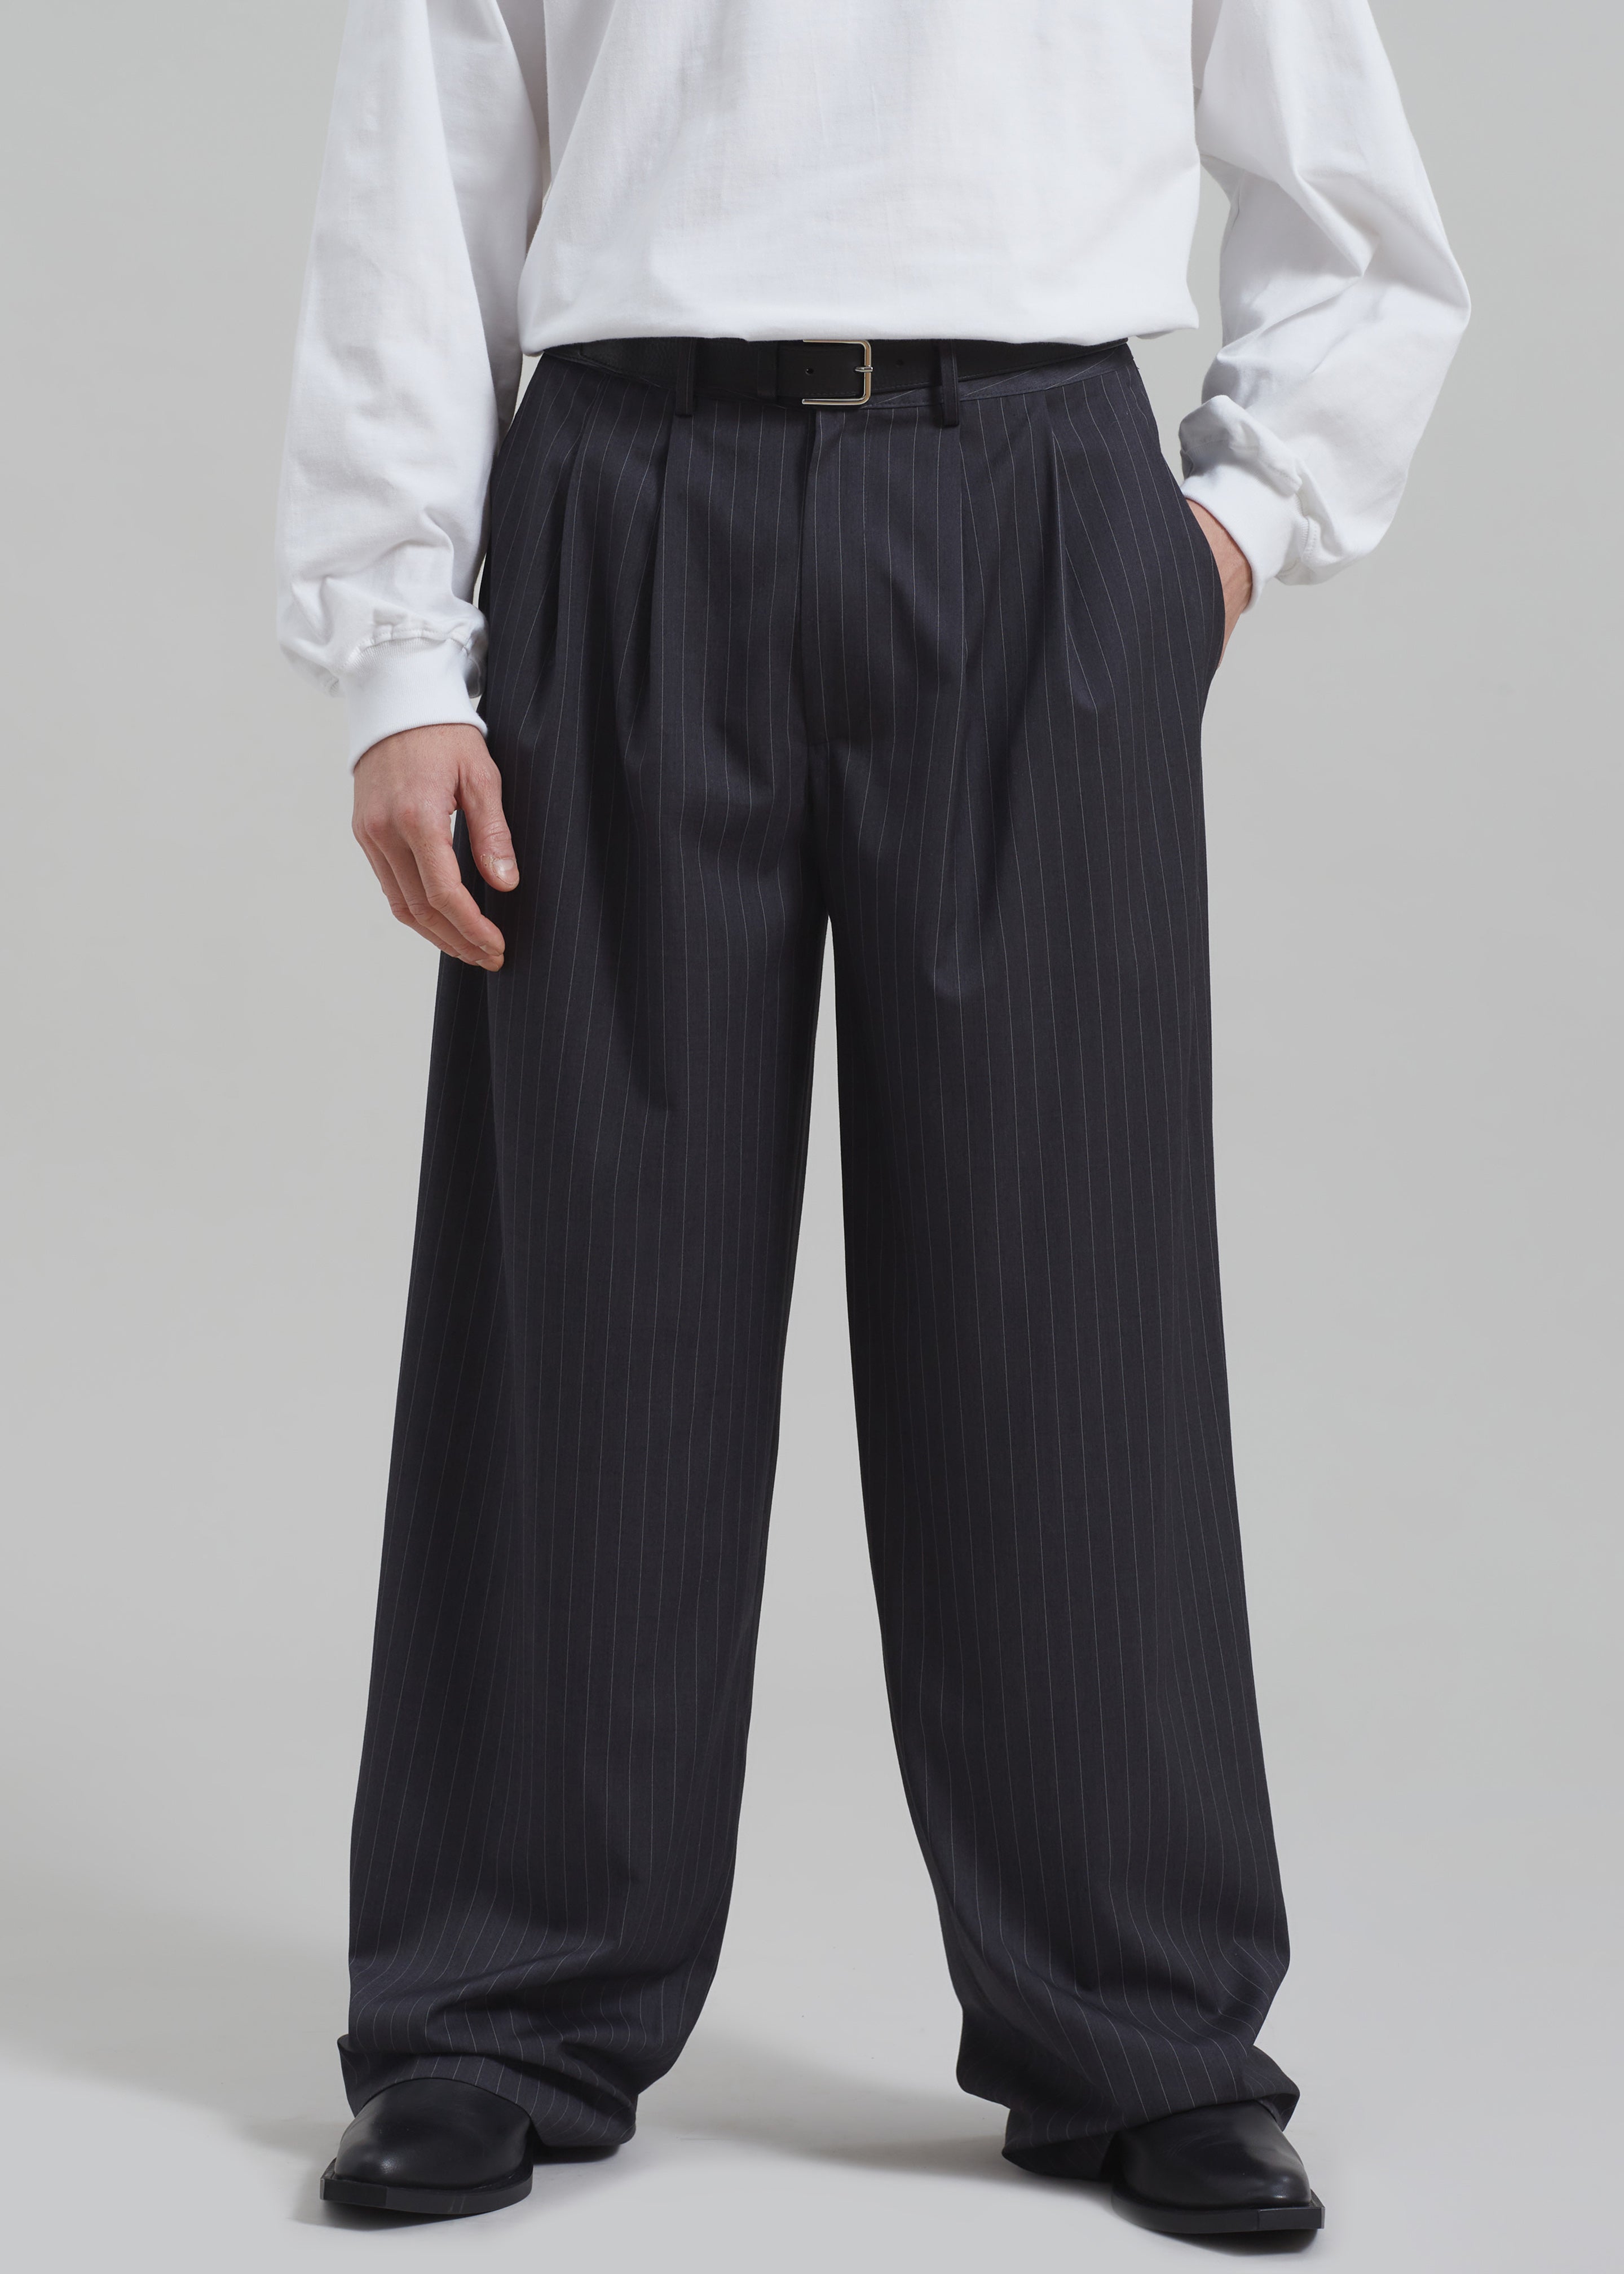 Peyton Pleated Pants - Grey Pinstripe - 9